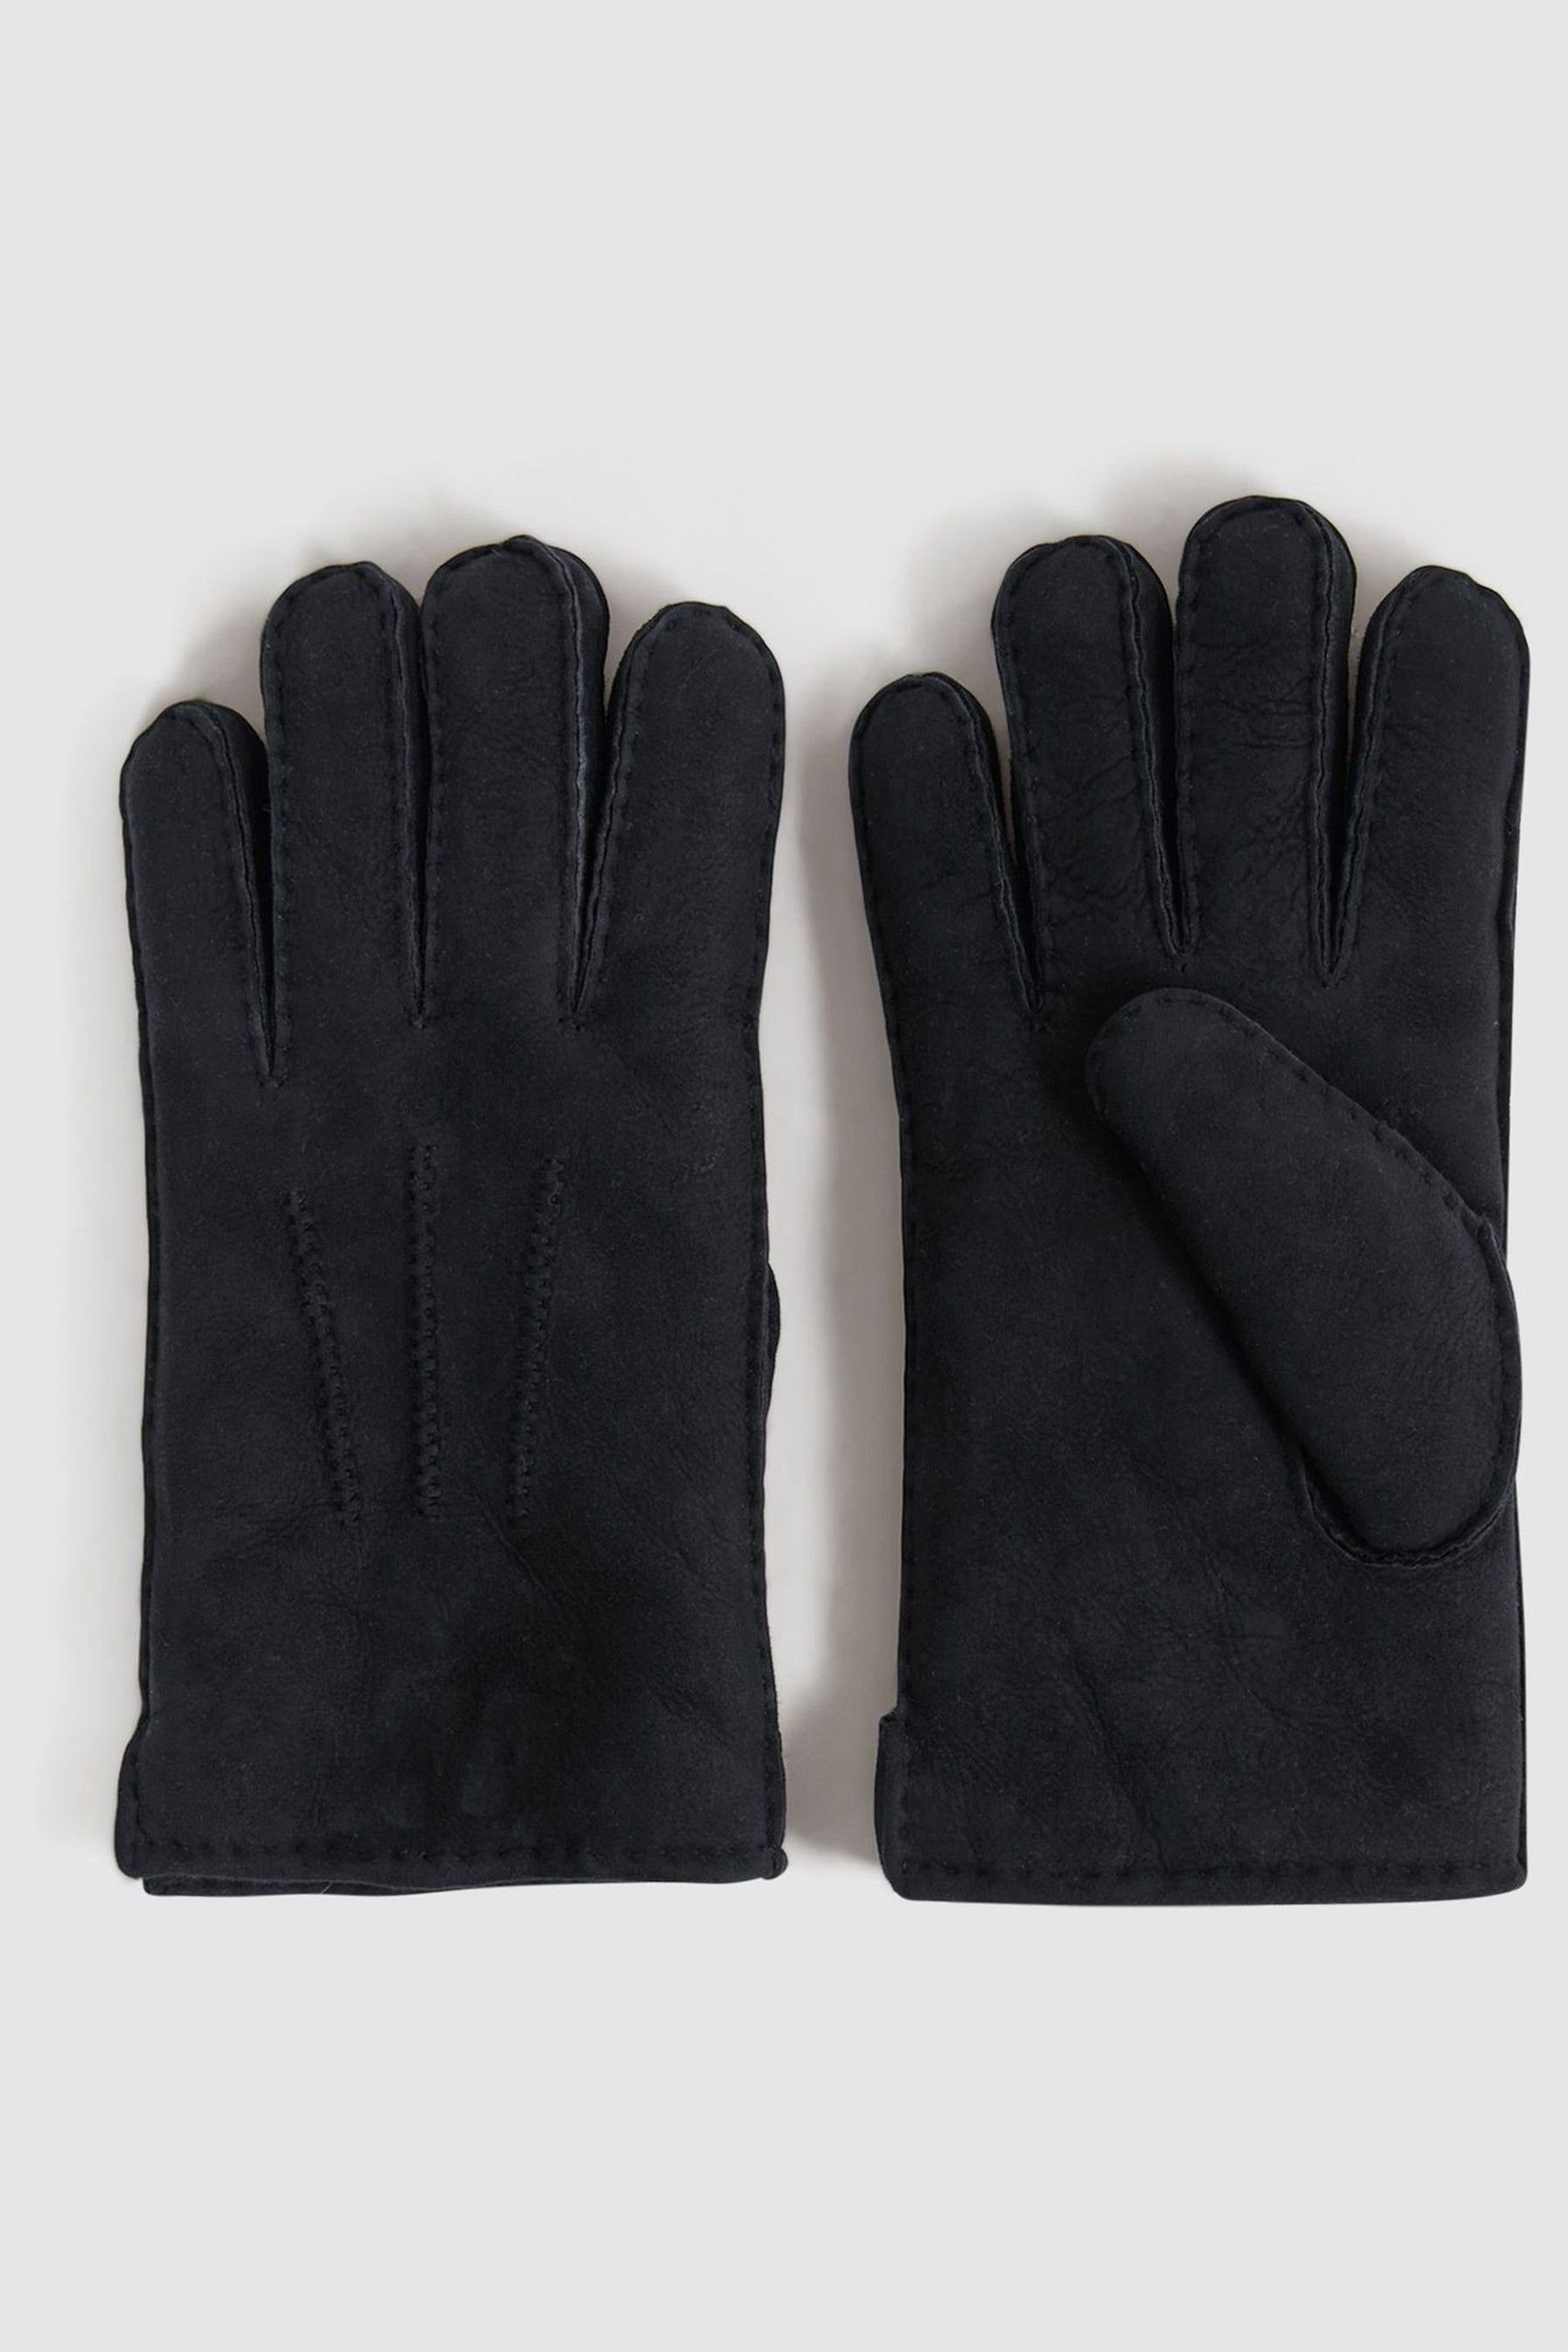 Reiss Aragon - Black Suede Shearling Gloves, L